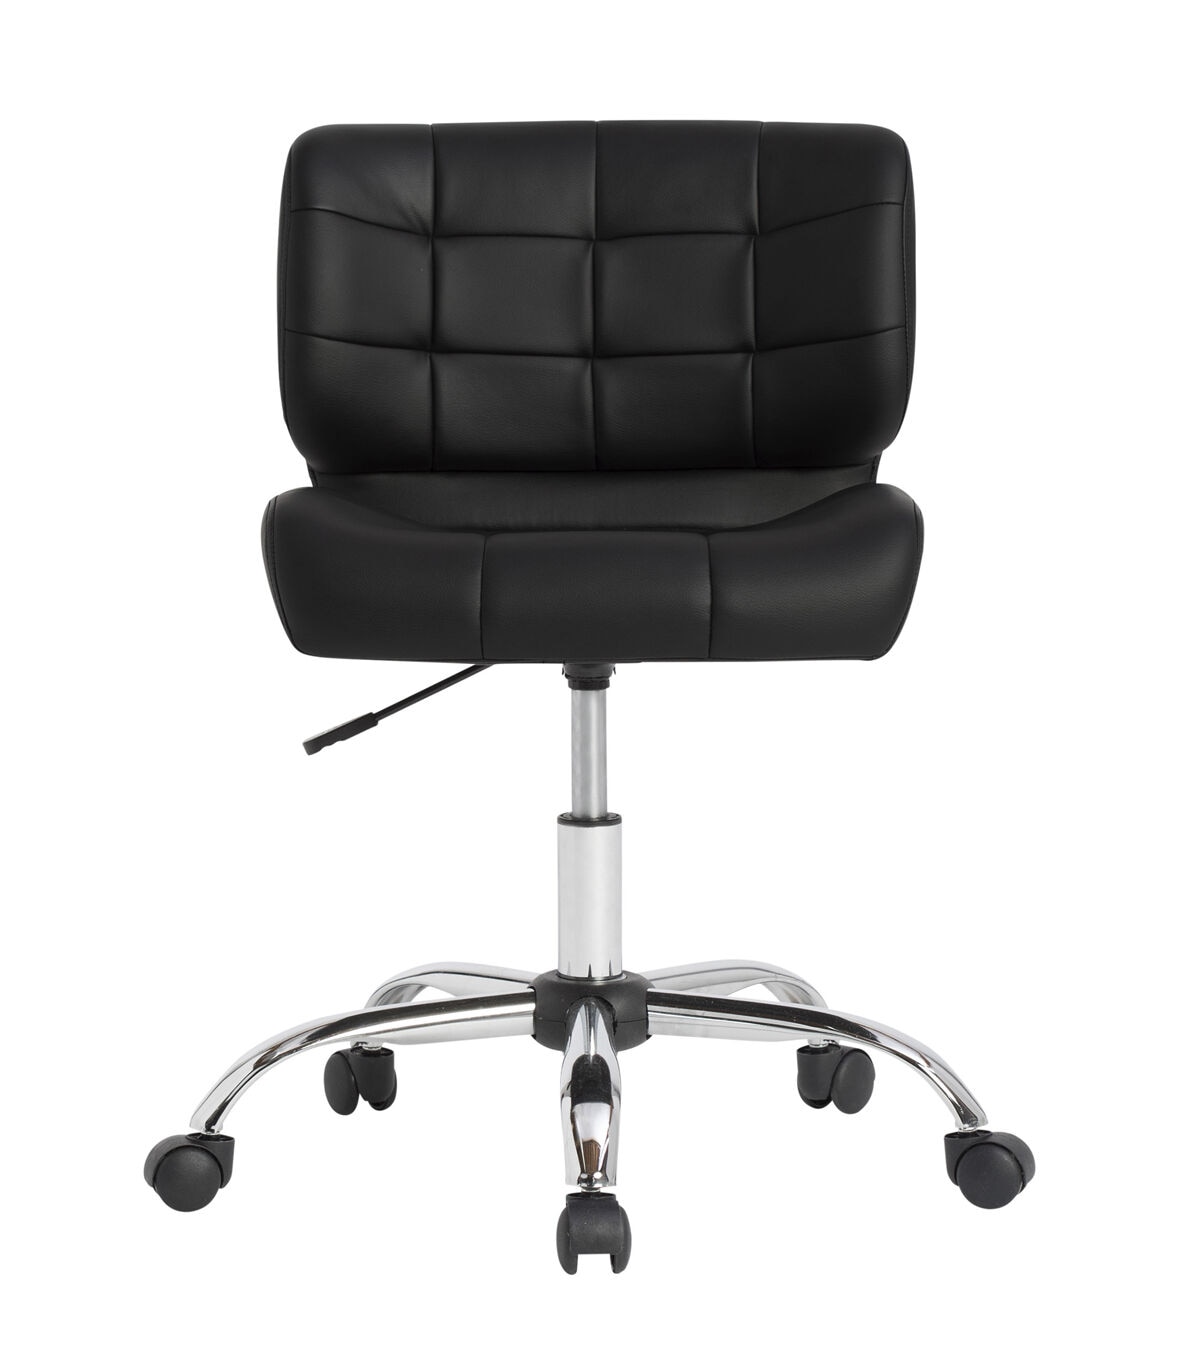 Studio Designs Crest Drafting Chair Black & Chrome